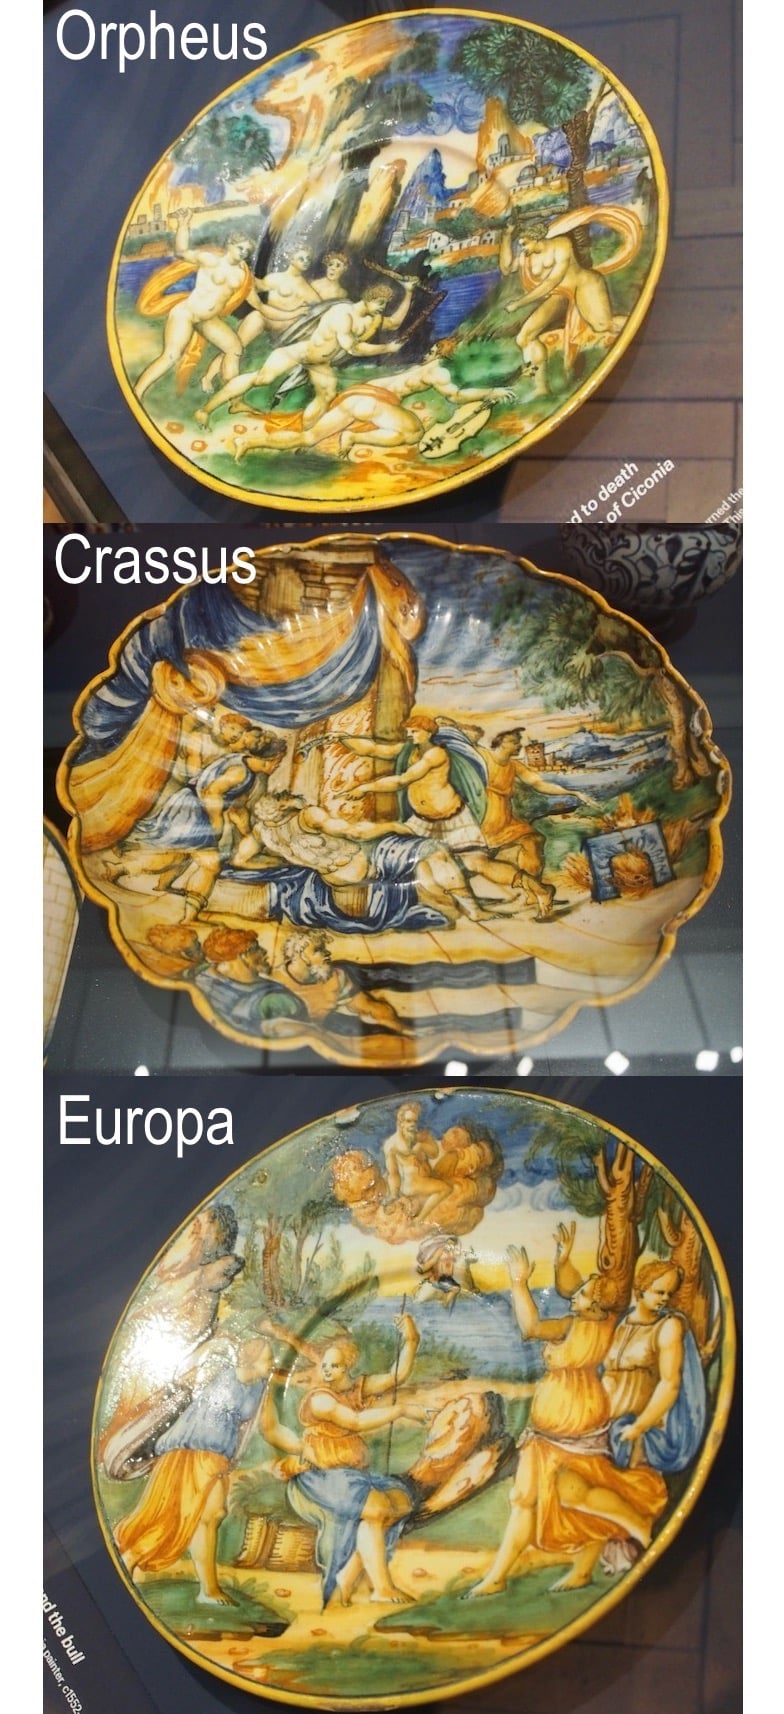 Plates showing Orpheus Crassus and Europa